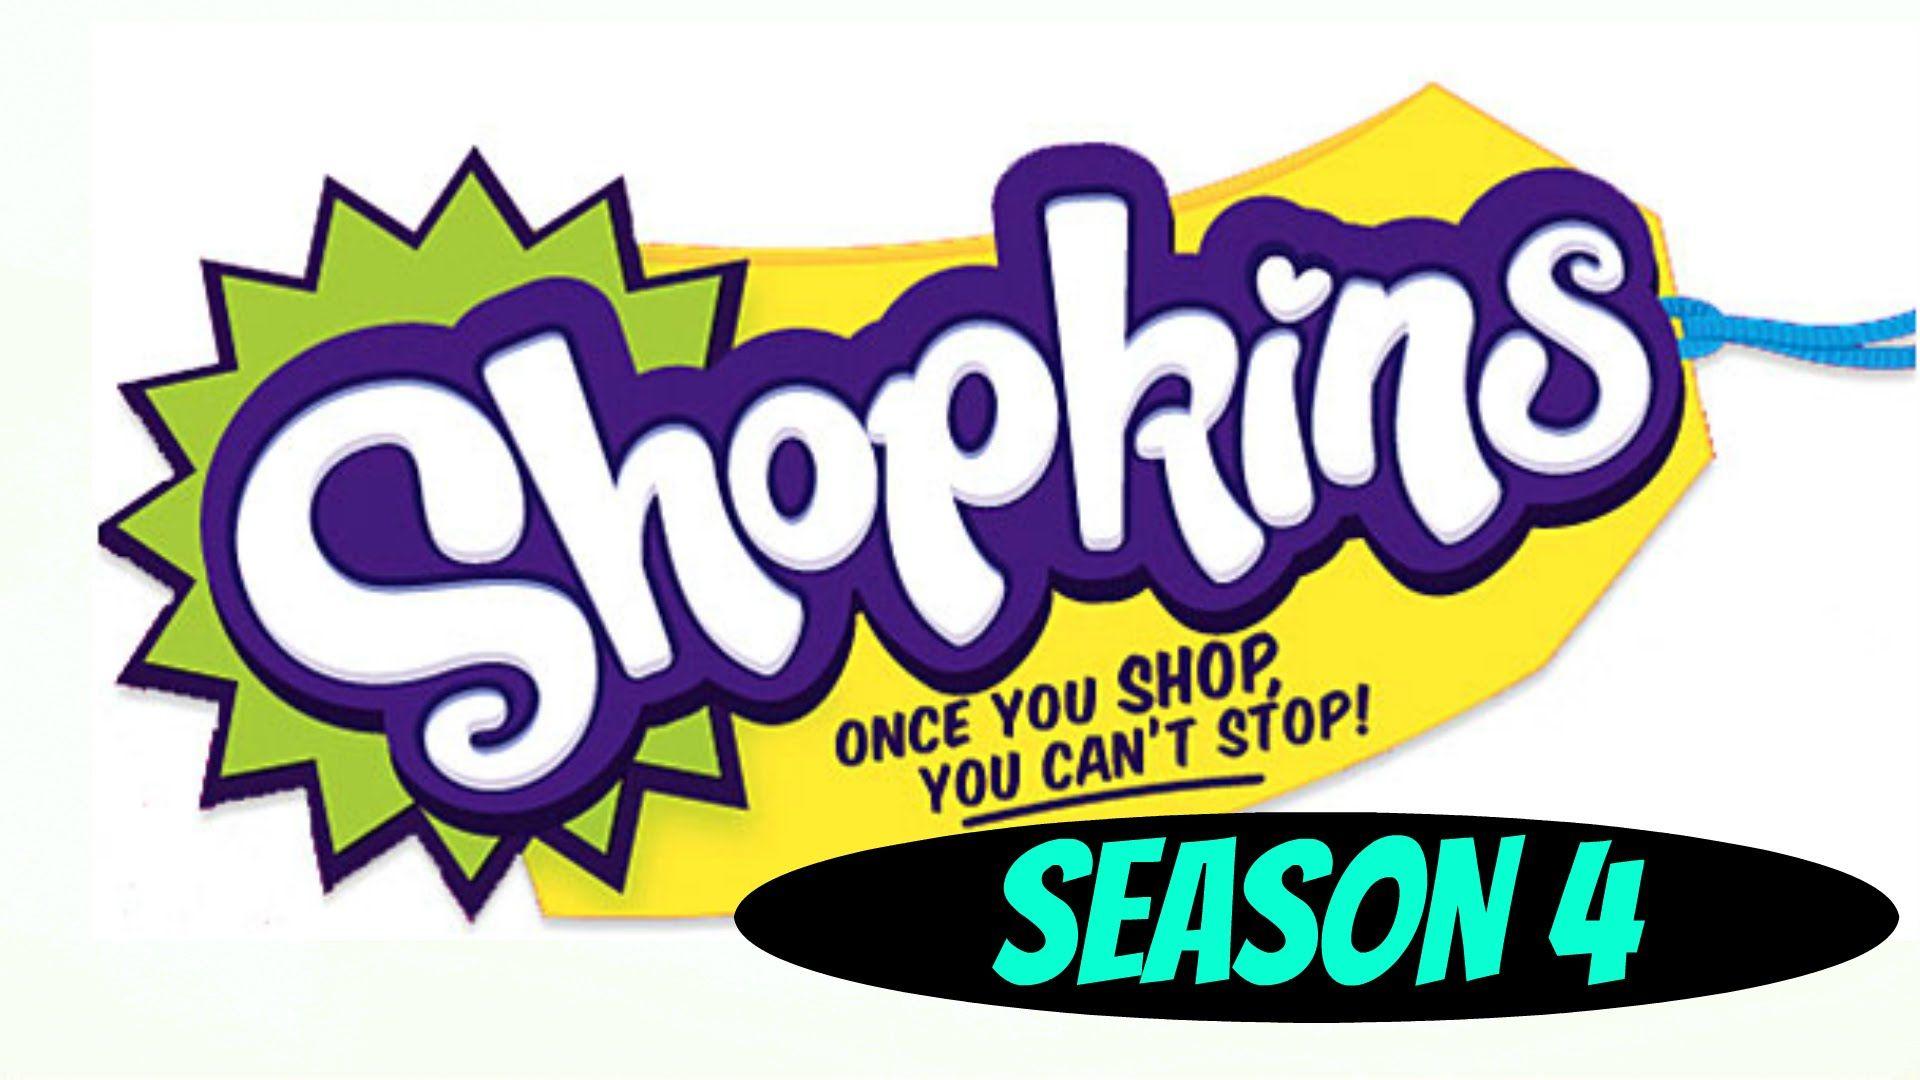 Shopkins Logo - Shopkins logo image library download free